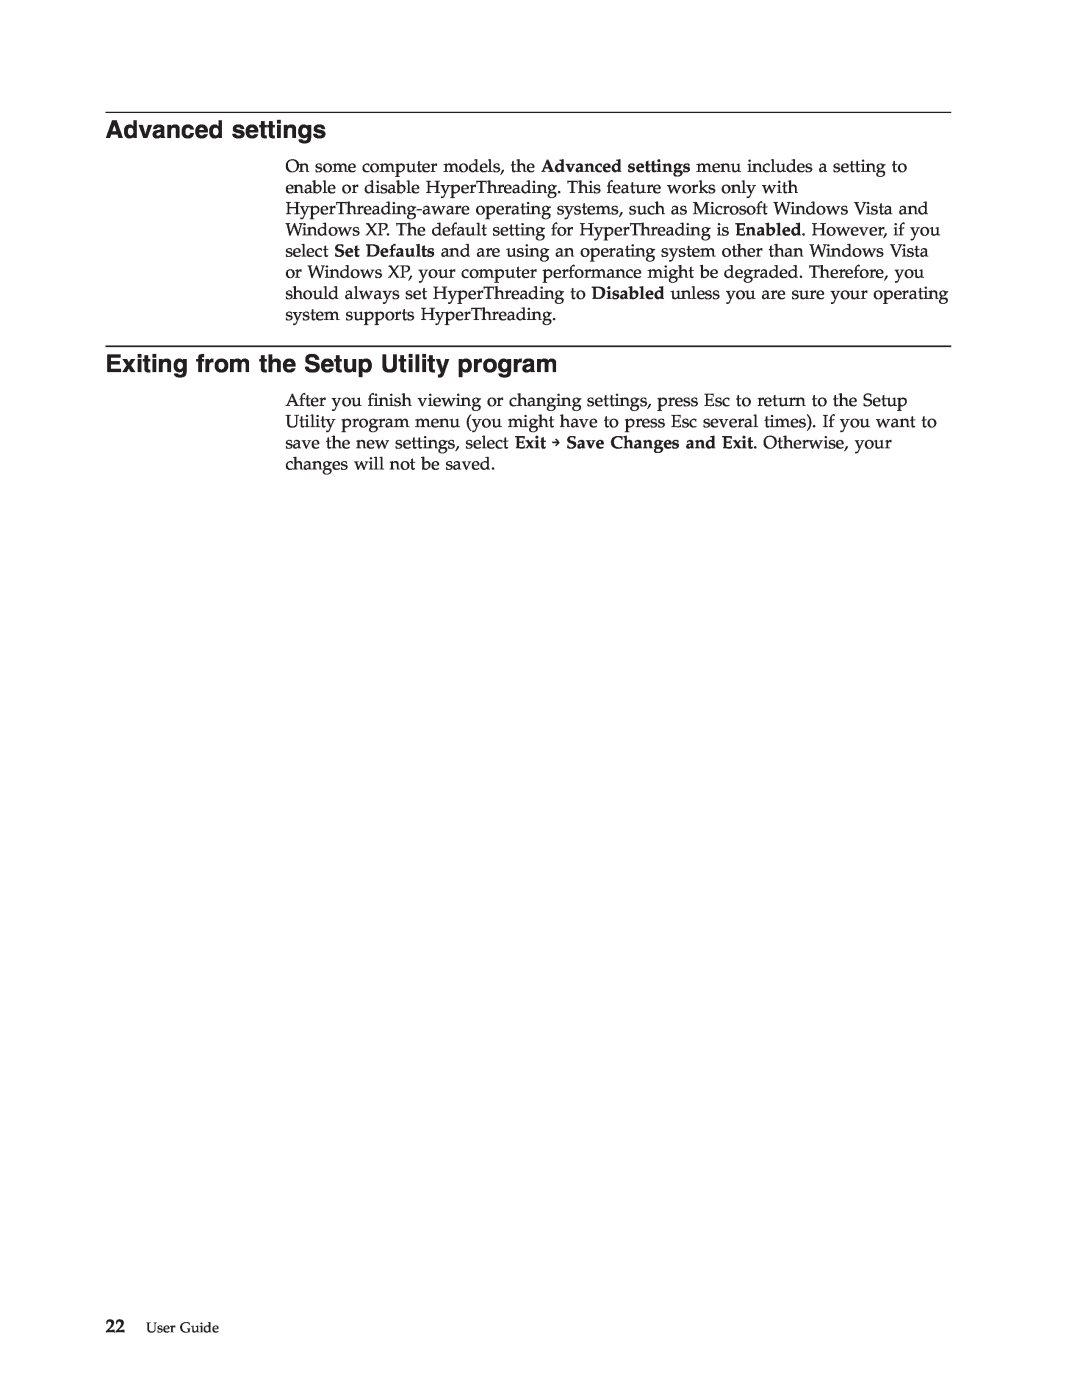 Lenovo 6306 manual Advanced settings, Exiting from the Setup Utility program, 22User Guide 